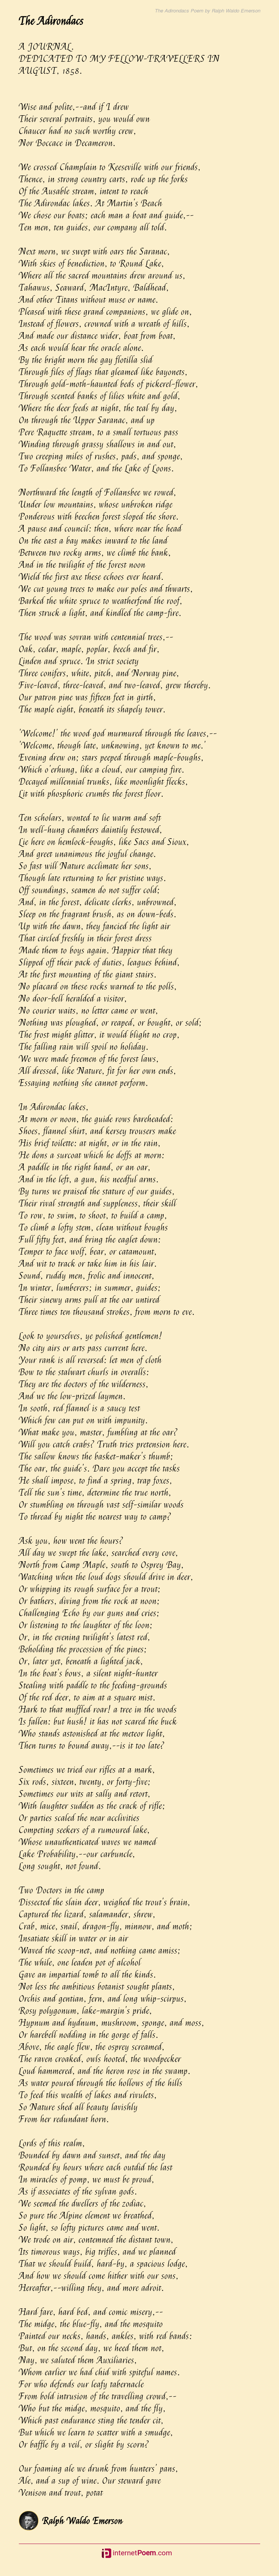 The Adirondacs Poem By Ralph Waldo Emerson